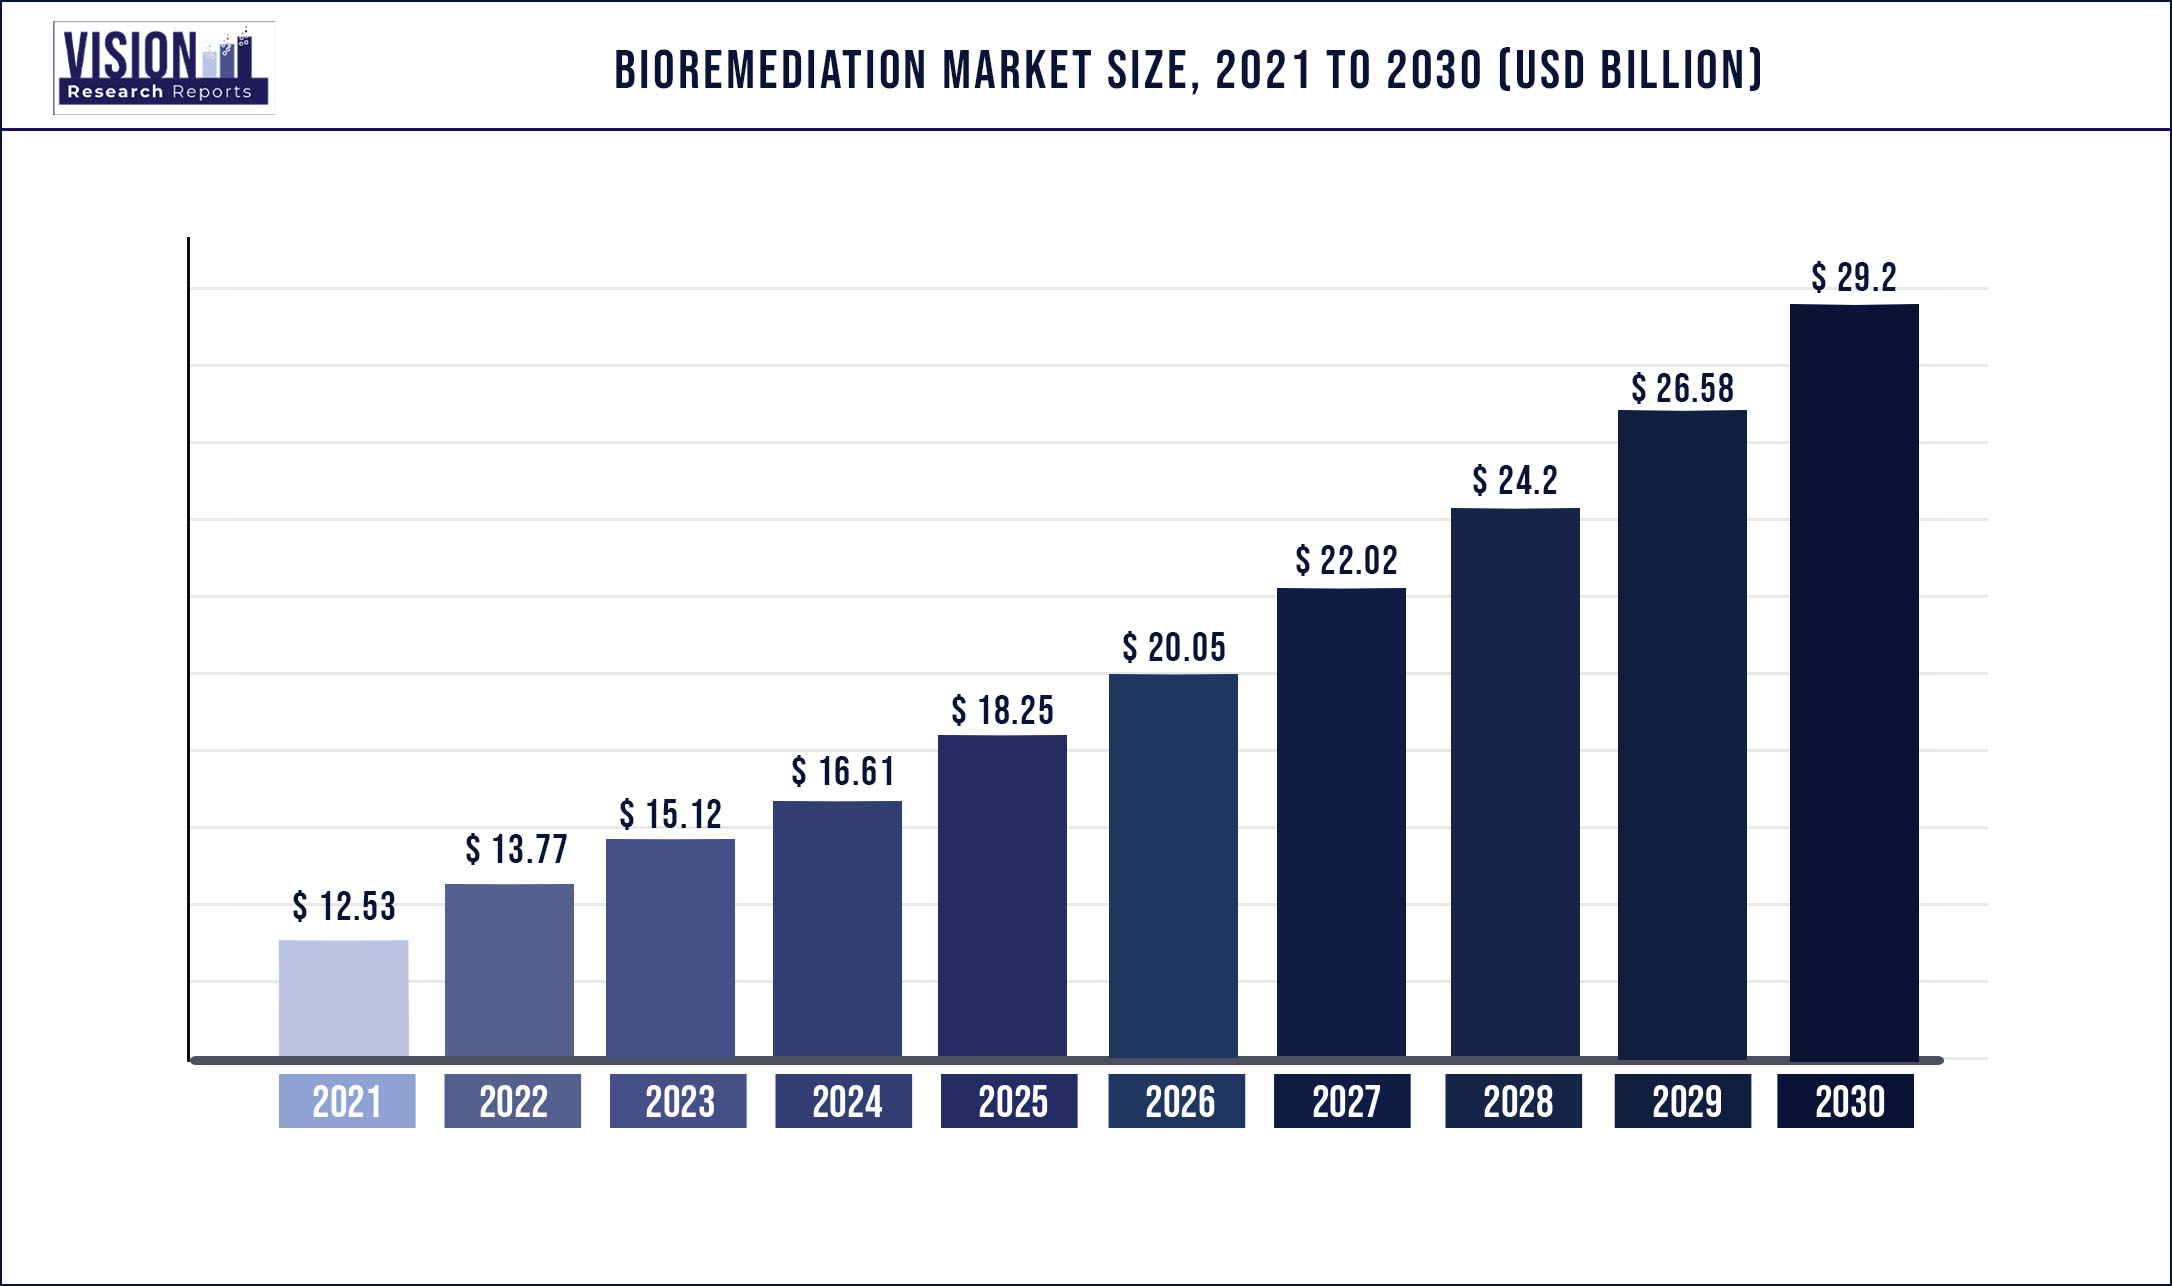 Bioremediation Market Size 2021 to 2030